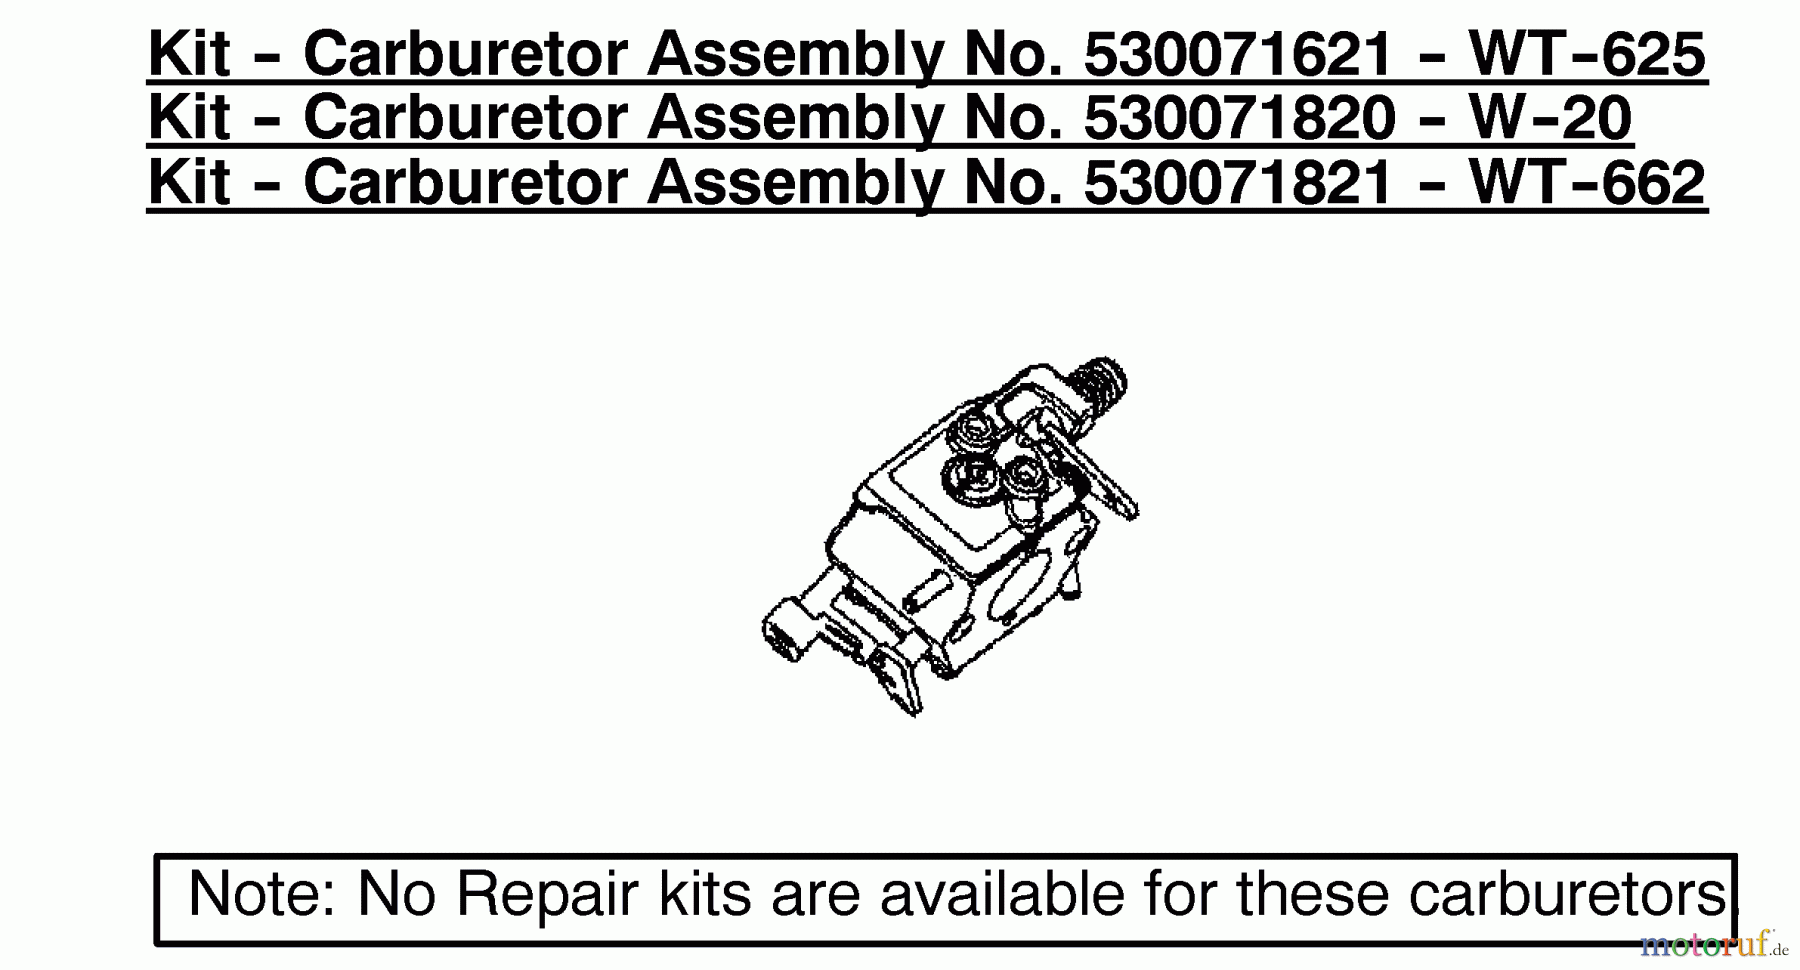  Poulan / Weed Eater Motorsägen 2250 (Type 4) - Poulan Woodmaster Chainsaw Kit - Carburetor Assembly 530071621/530071820/530071821